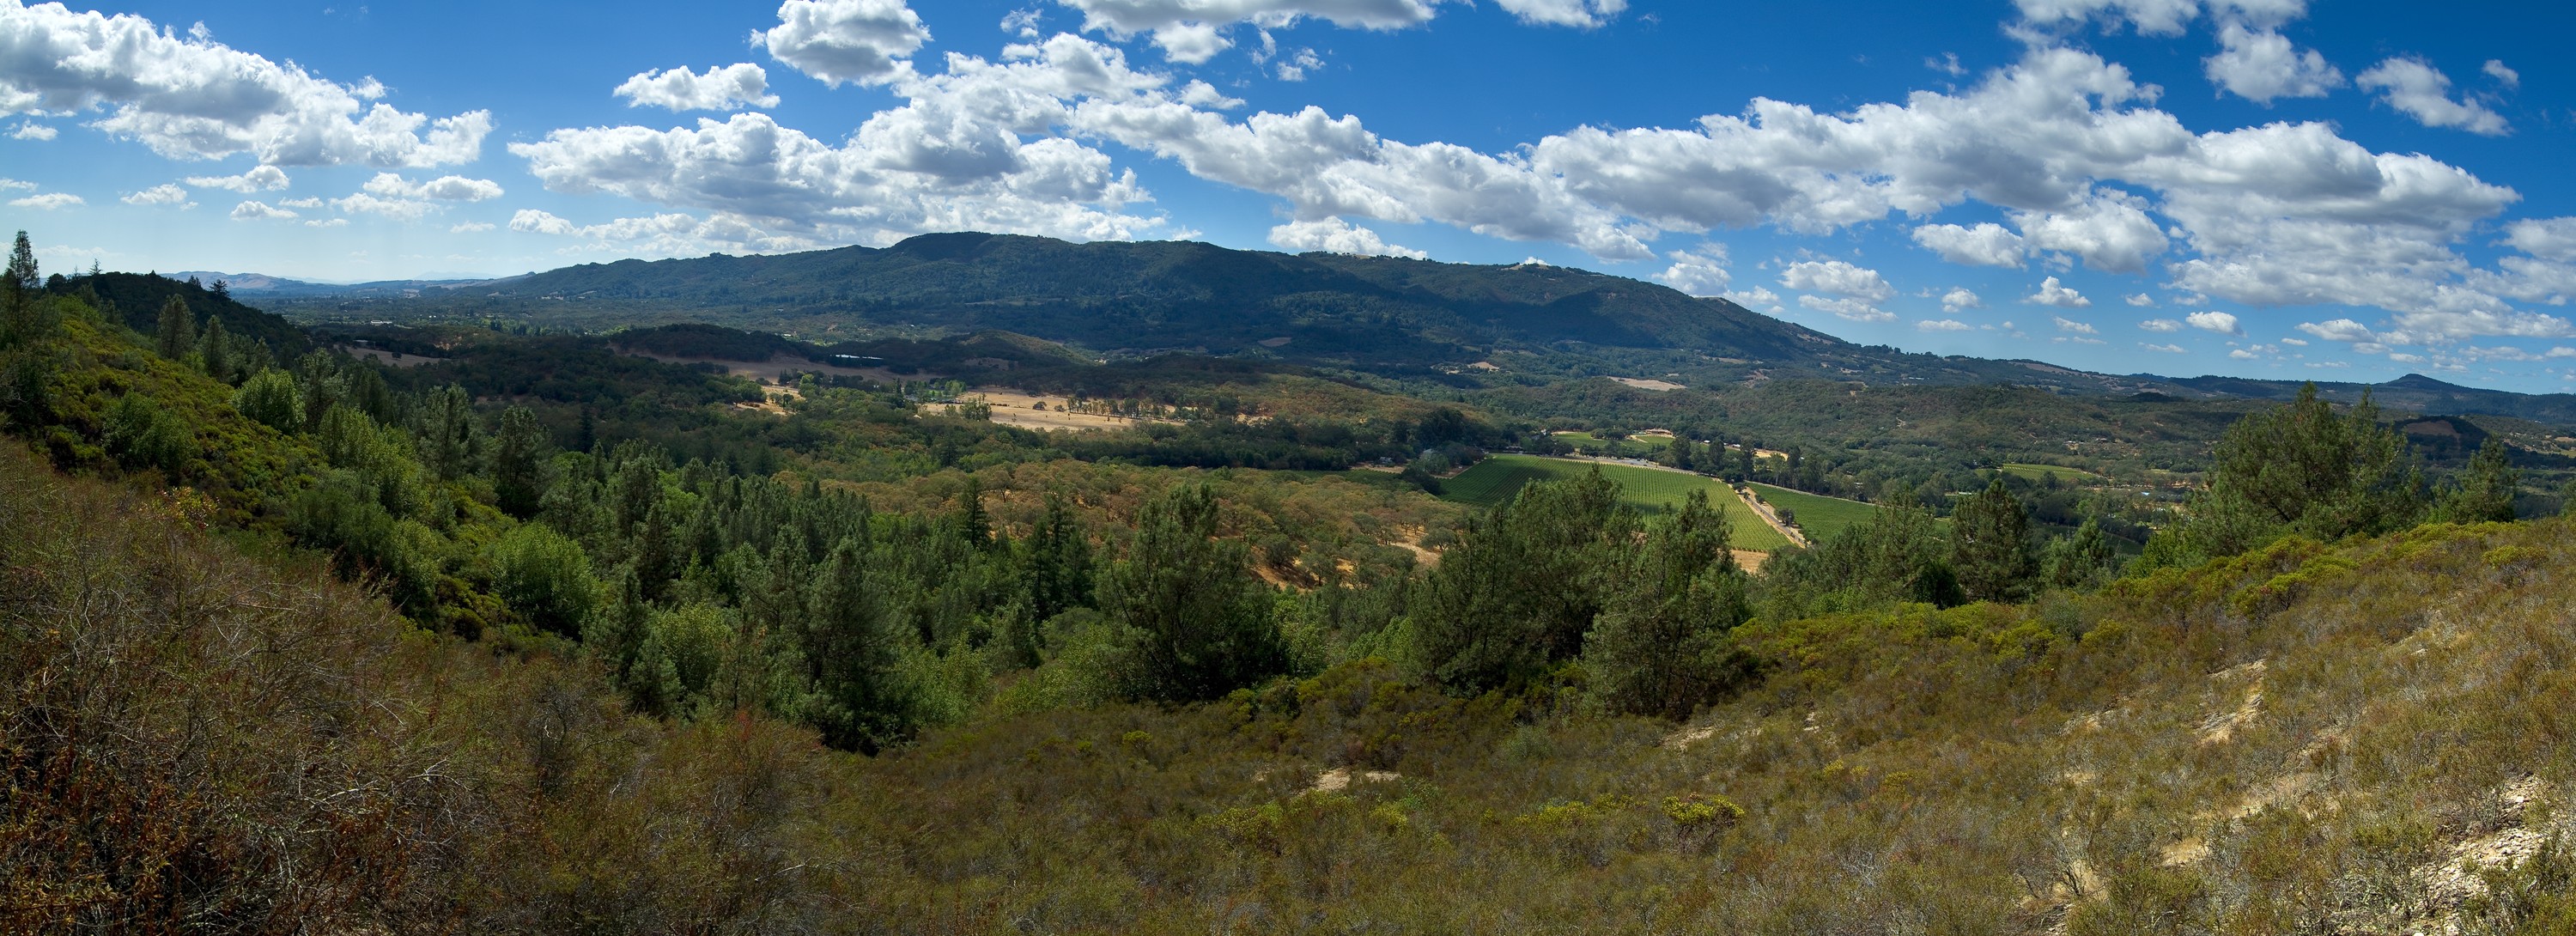   View from Glen Oaks across Sonoma Valley to Sonoma Mountain showing region of wildlife corridor. Stephen Joseph, Sonoma Land Trust.